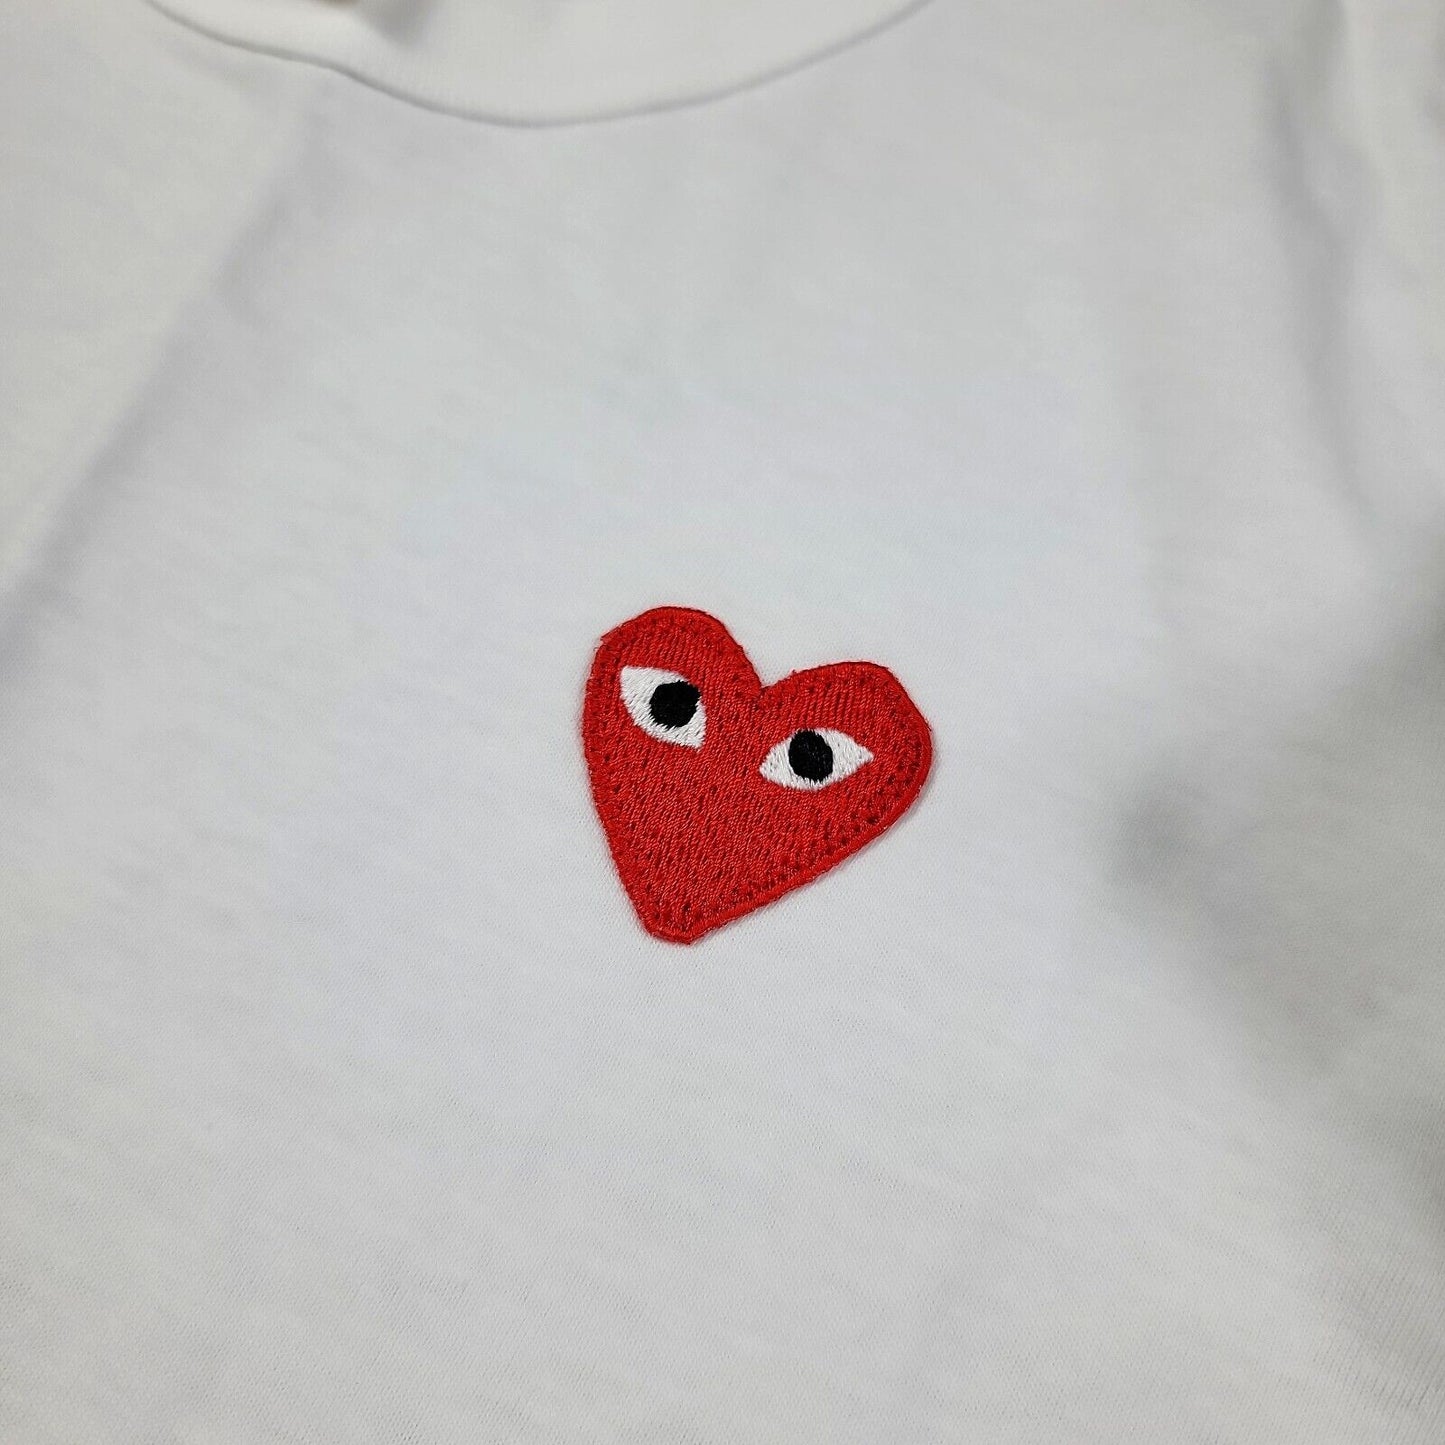 100% Authentic Comme des Garçons CDG Red Heart Long Sleeve Shirt Size M Mens